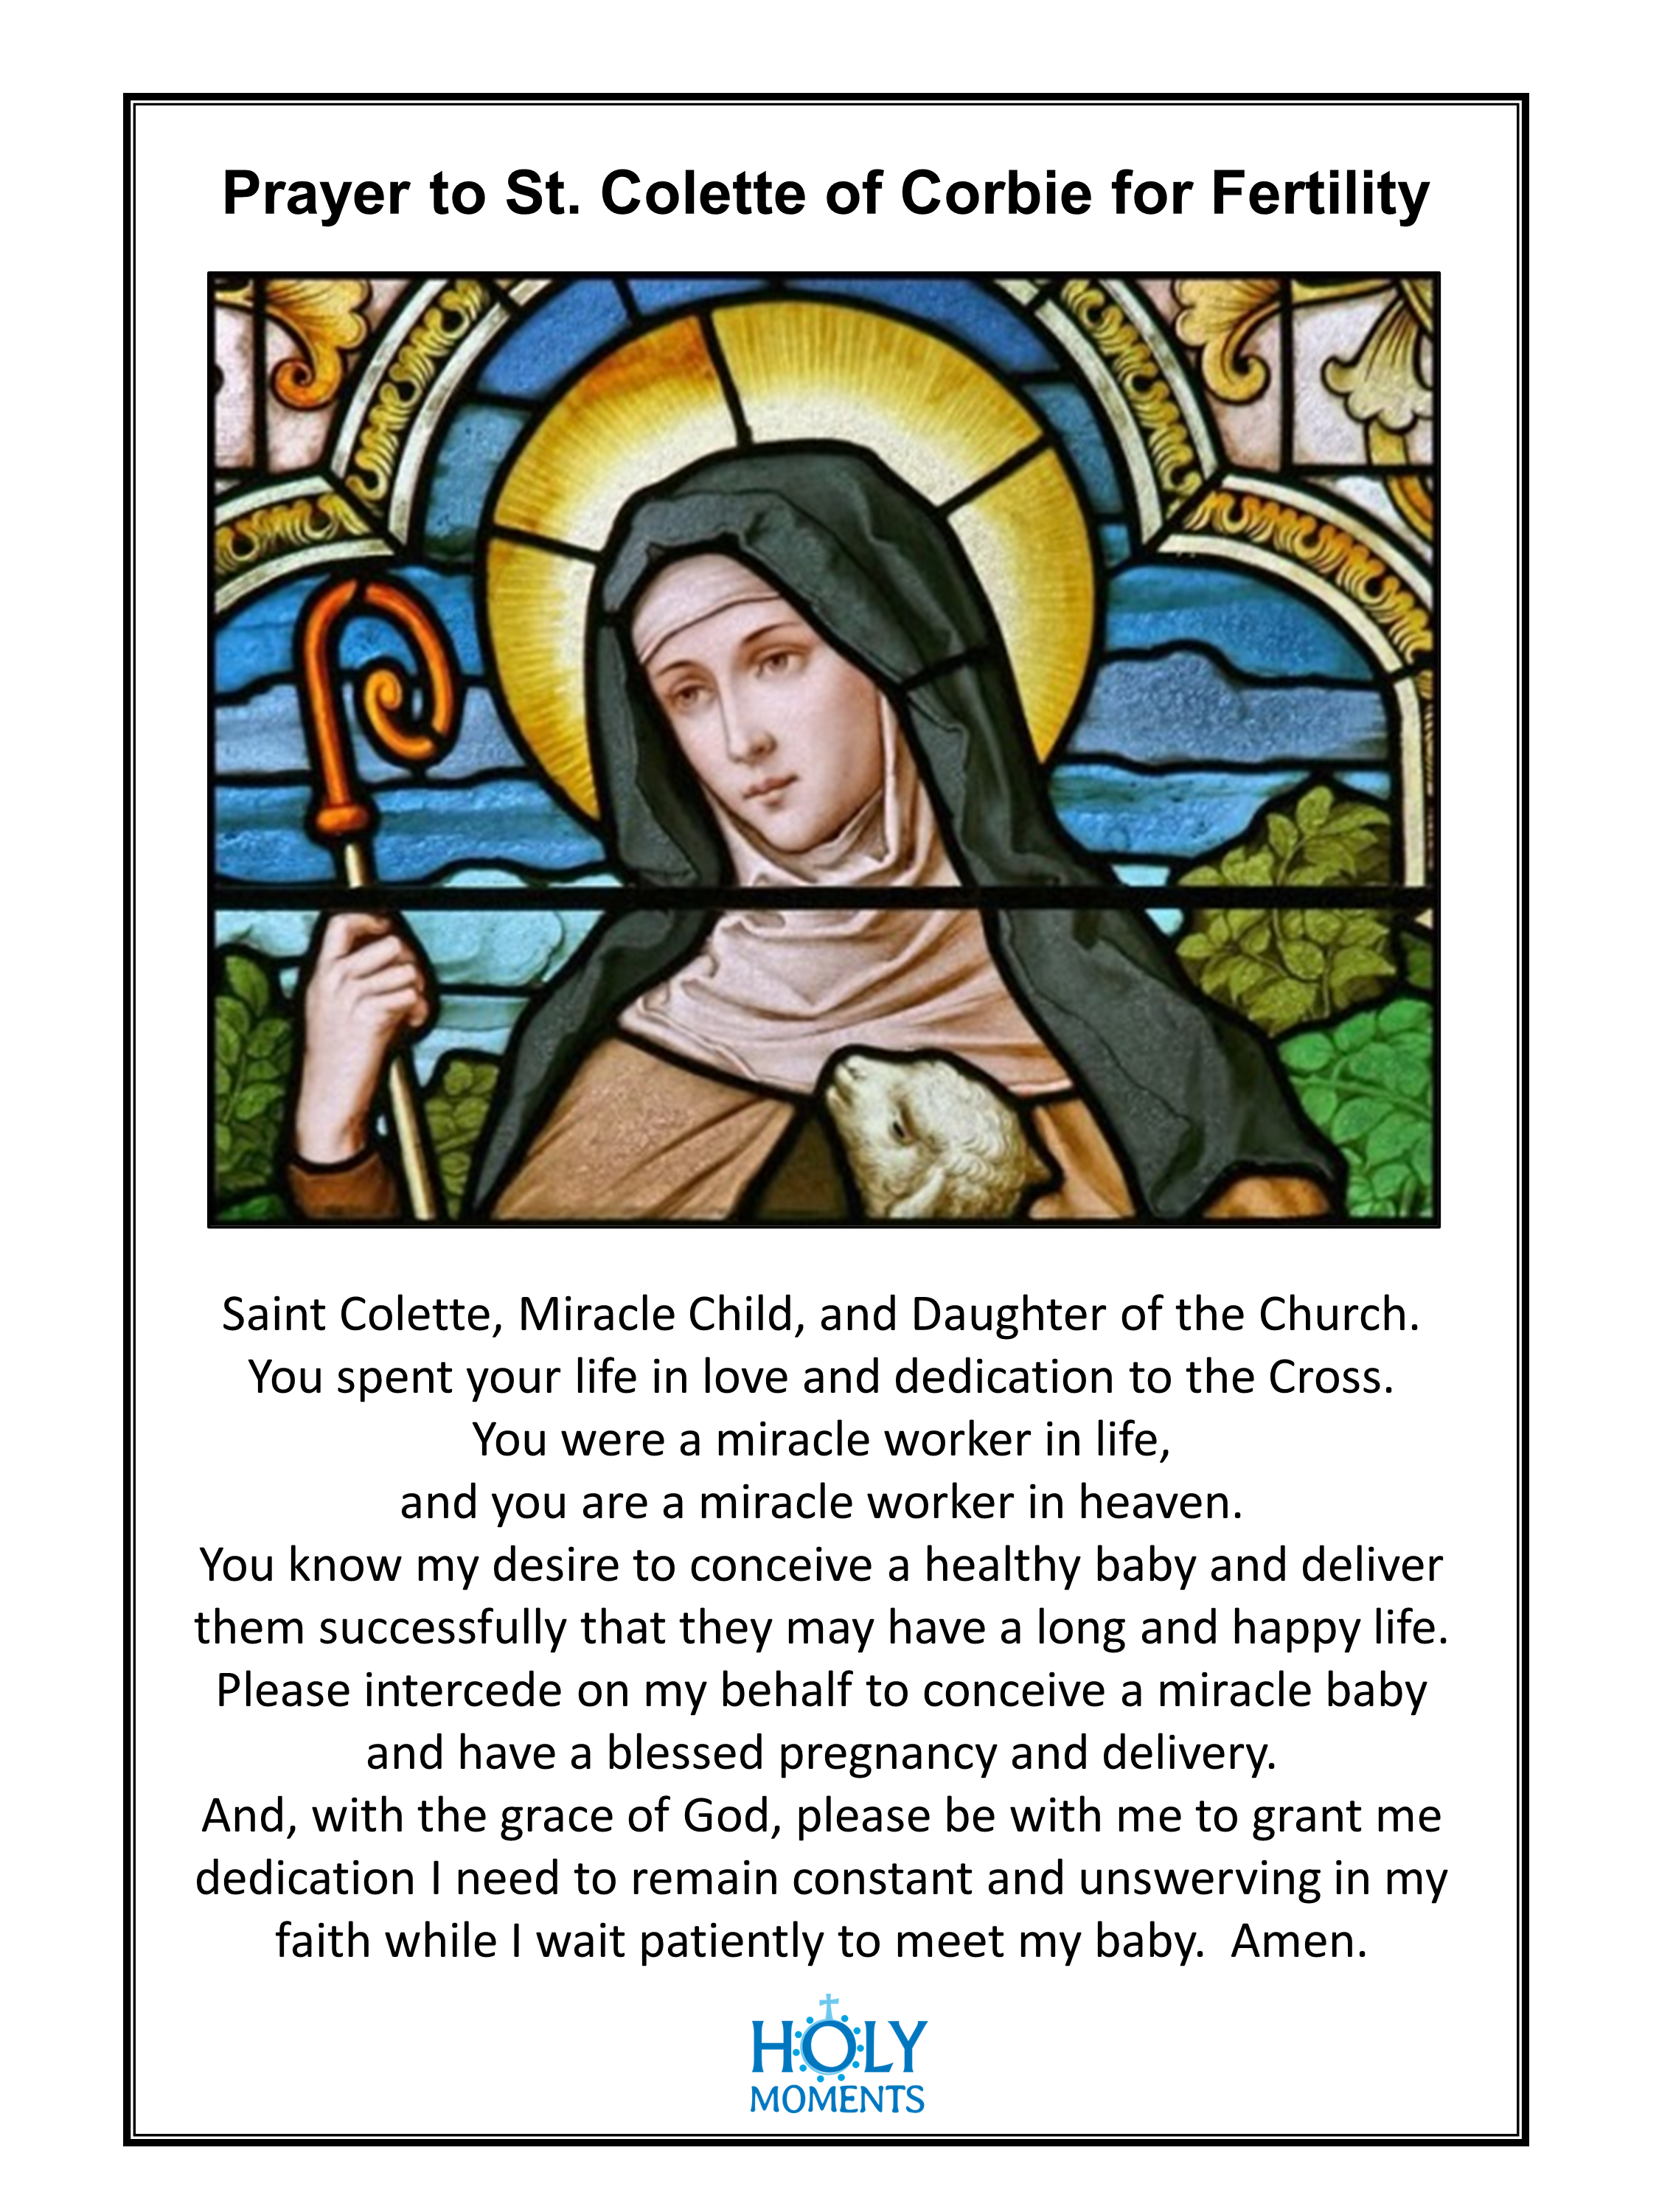 St Colette of Corbie Fertility Prayer